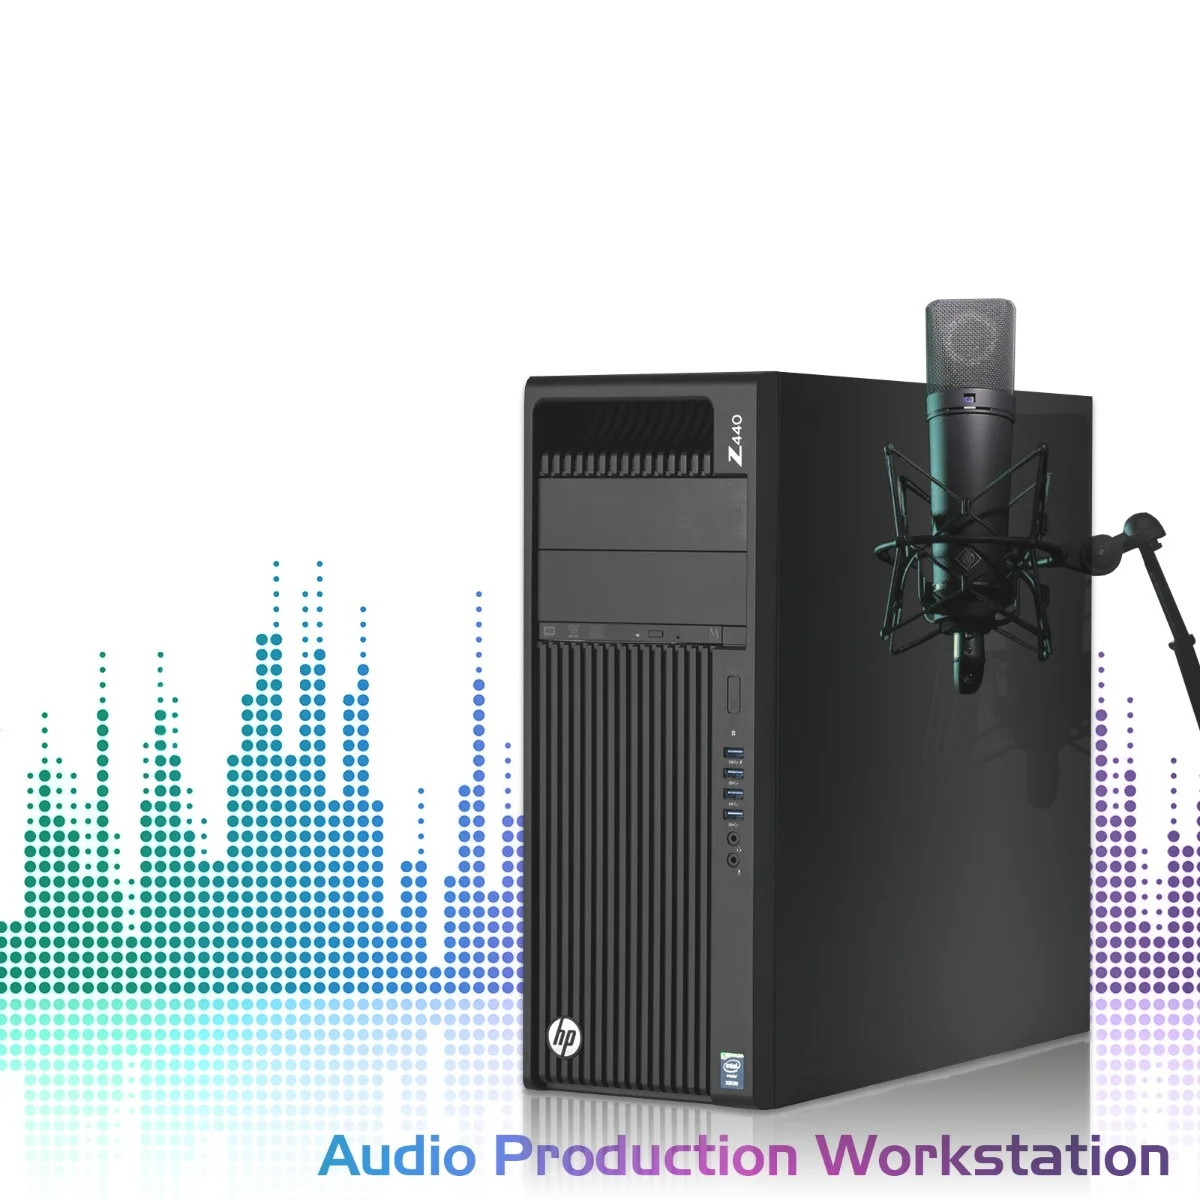 Audio Production (DAW) Pre-Configured Workstation